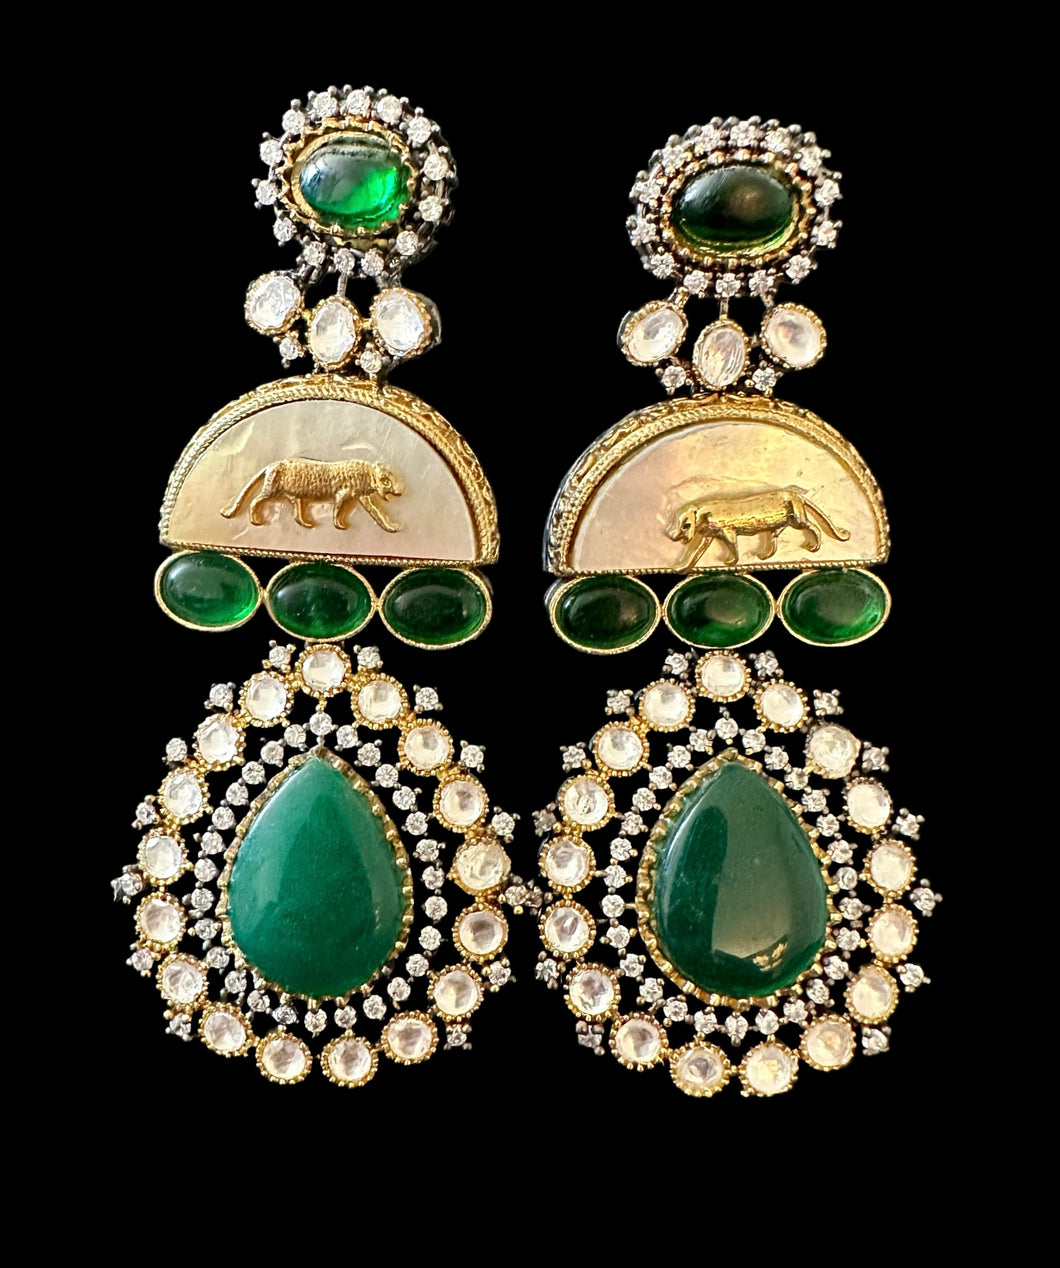 Sabyasachi inspired emerald earrings